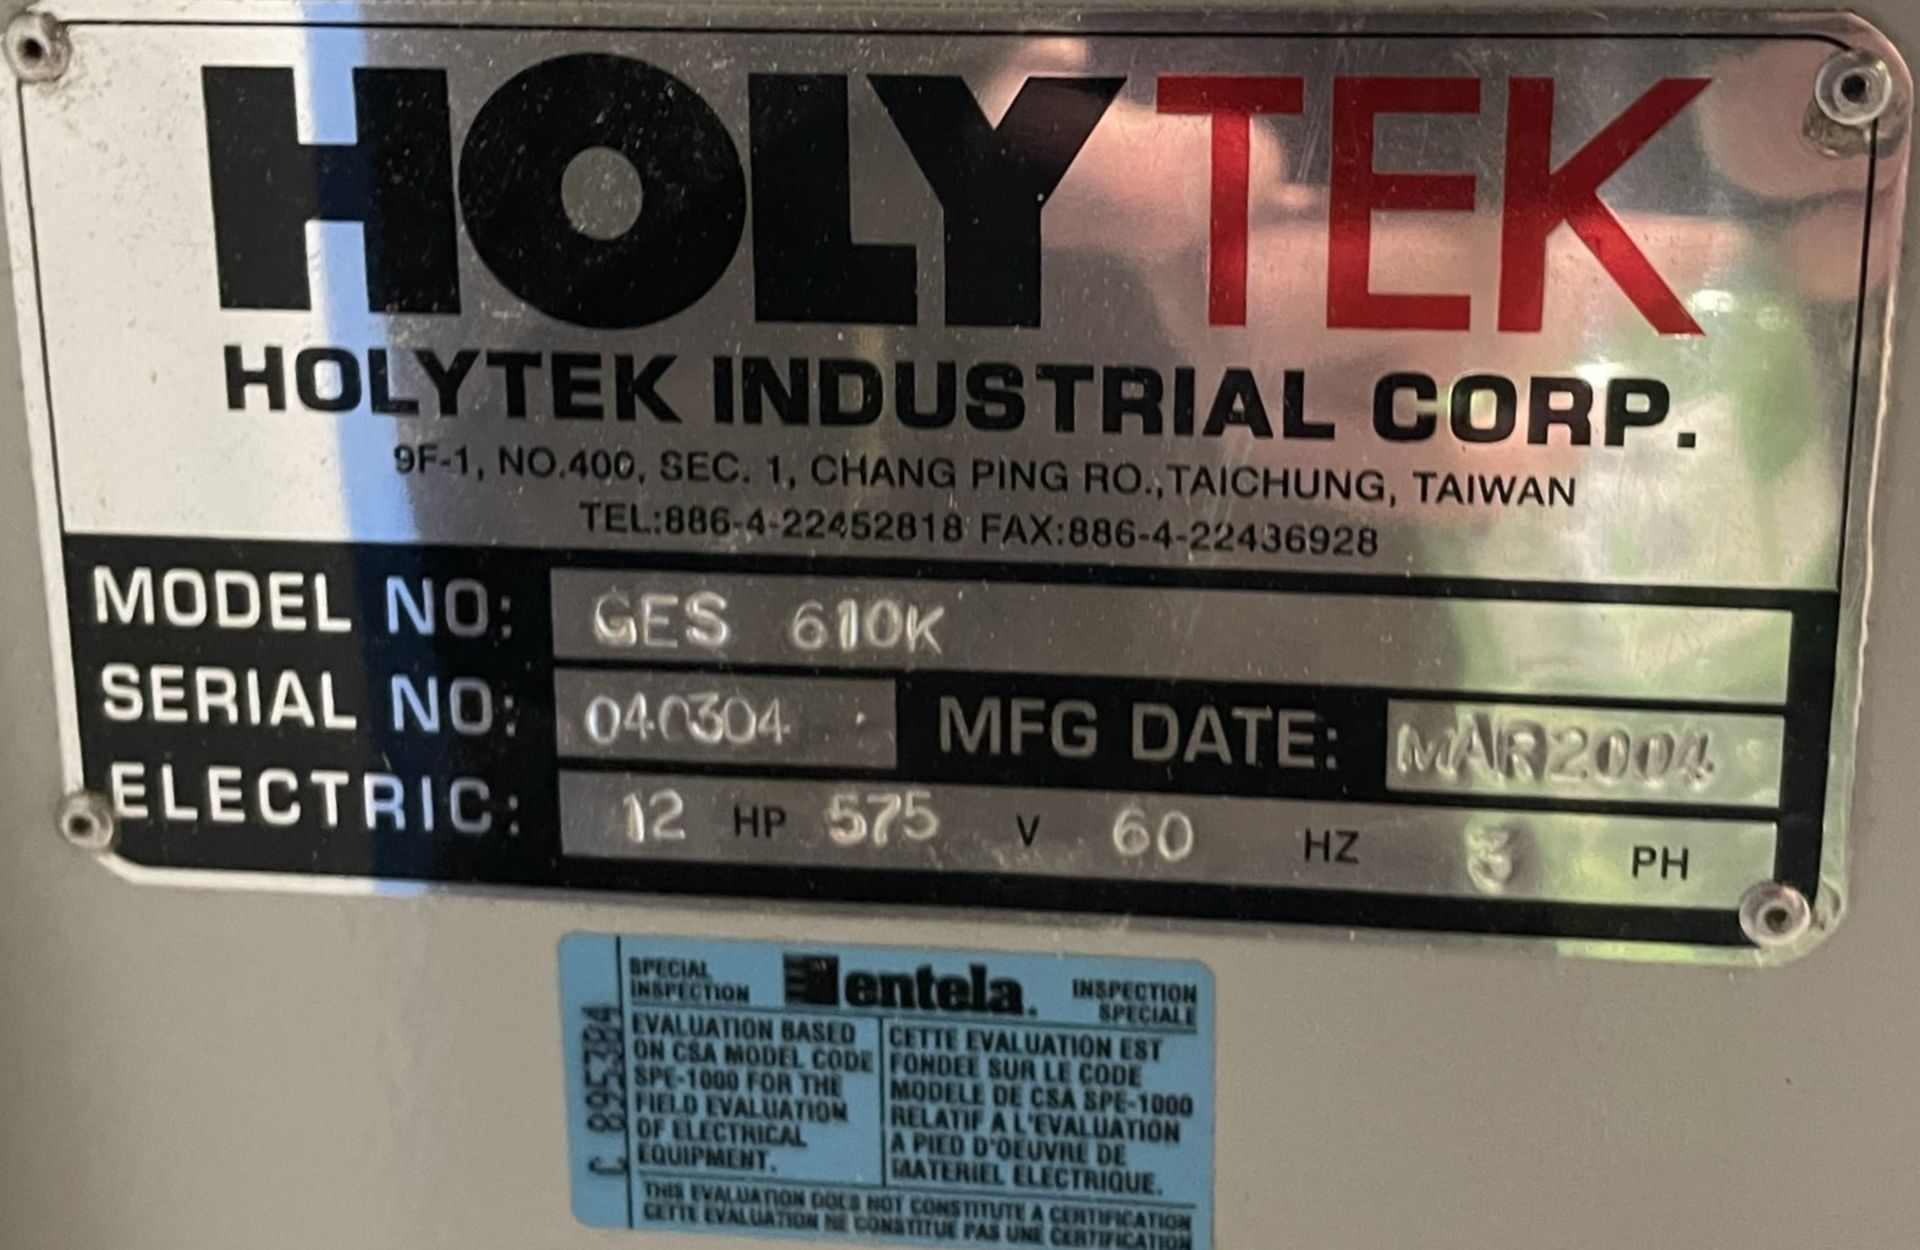 HOLYTEK (2004) GES 610K 24" AUTOMATIC BELT SANDER WITH HOLYTEK DP-525 CONTROL, 12 HP - Image 6 of 6